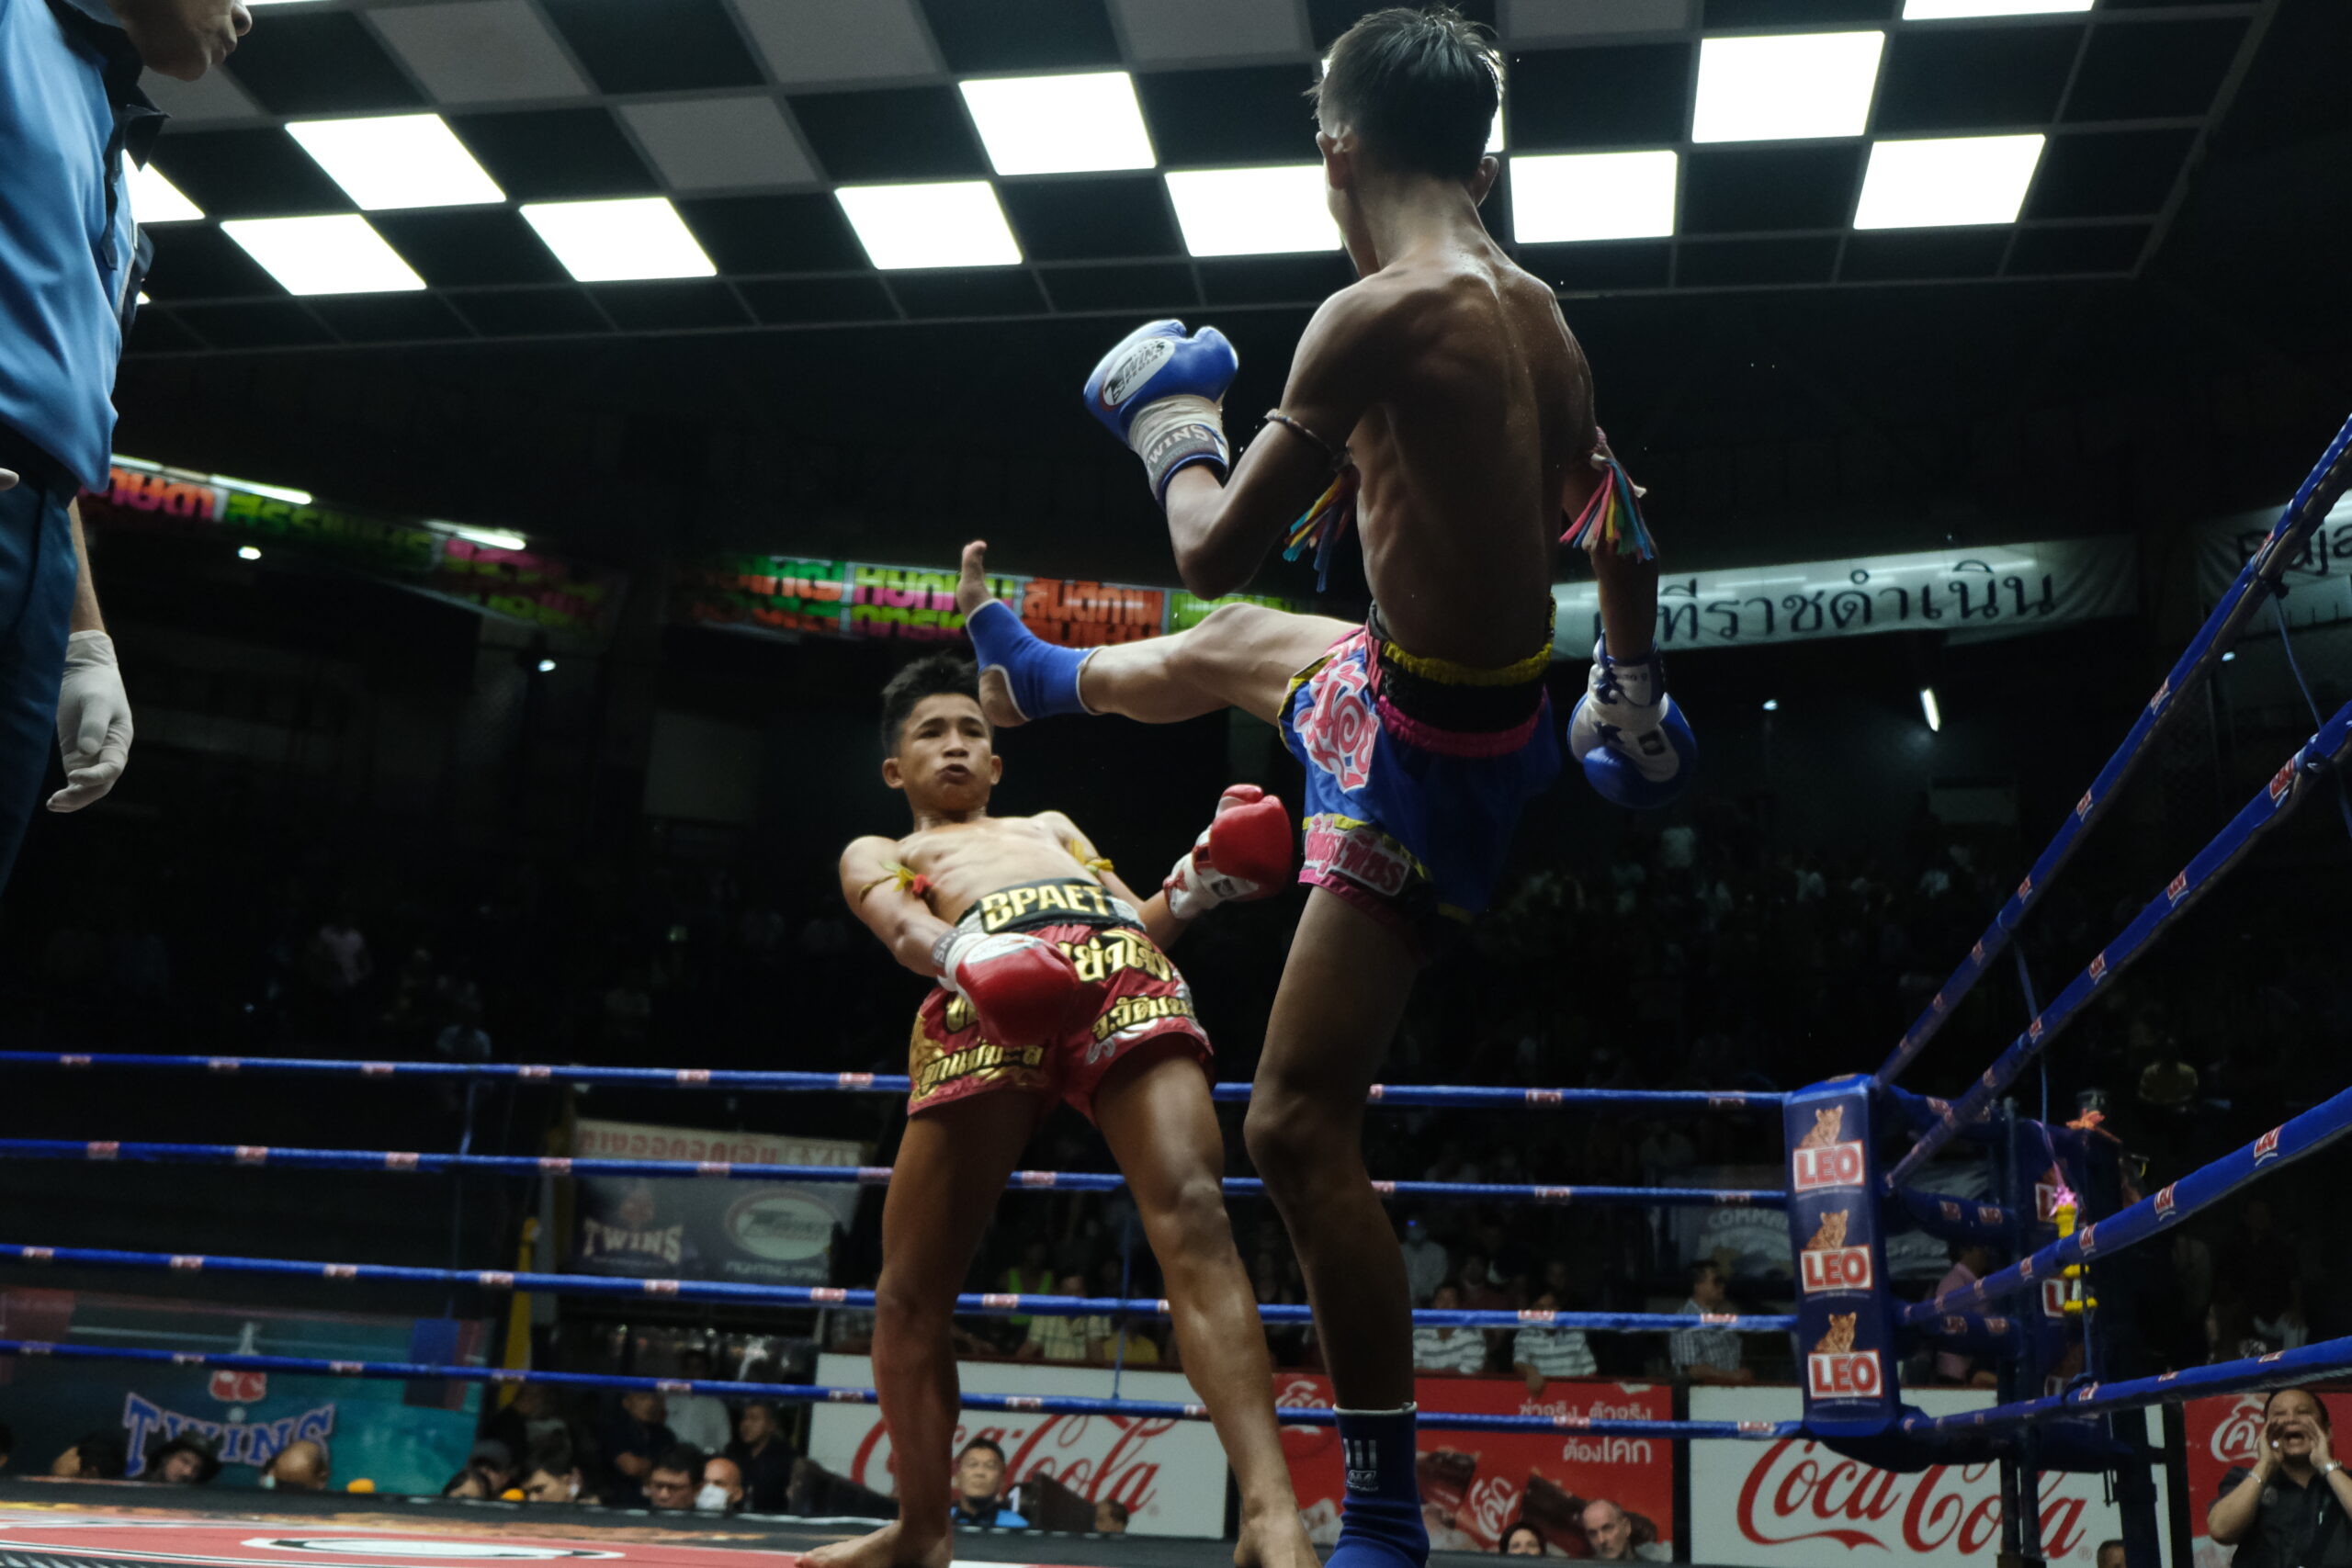 Lanyamo Wor Watthana at Rajadamnern Stadium in a Muay Thai bout